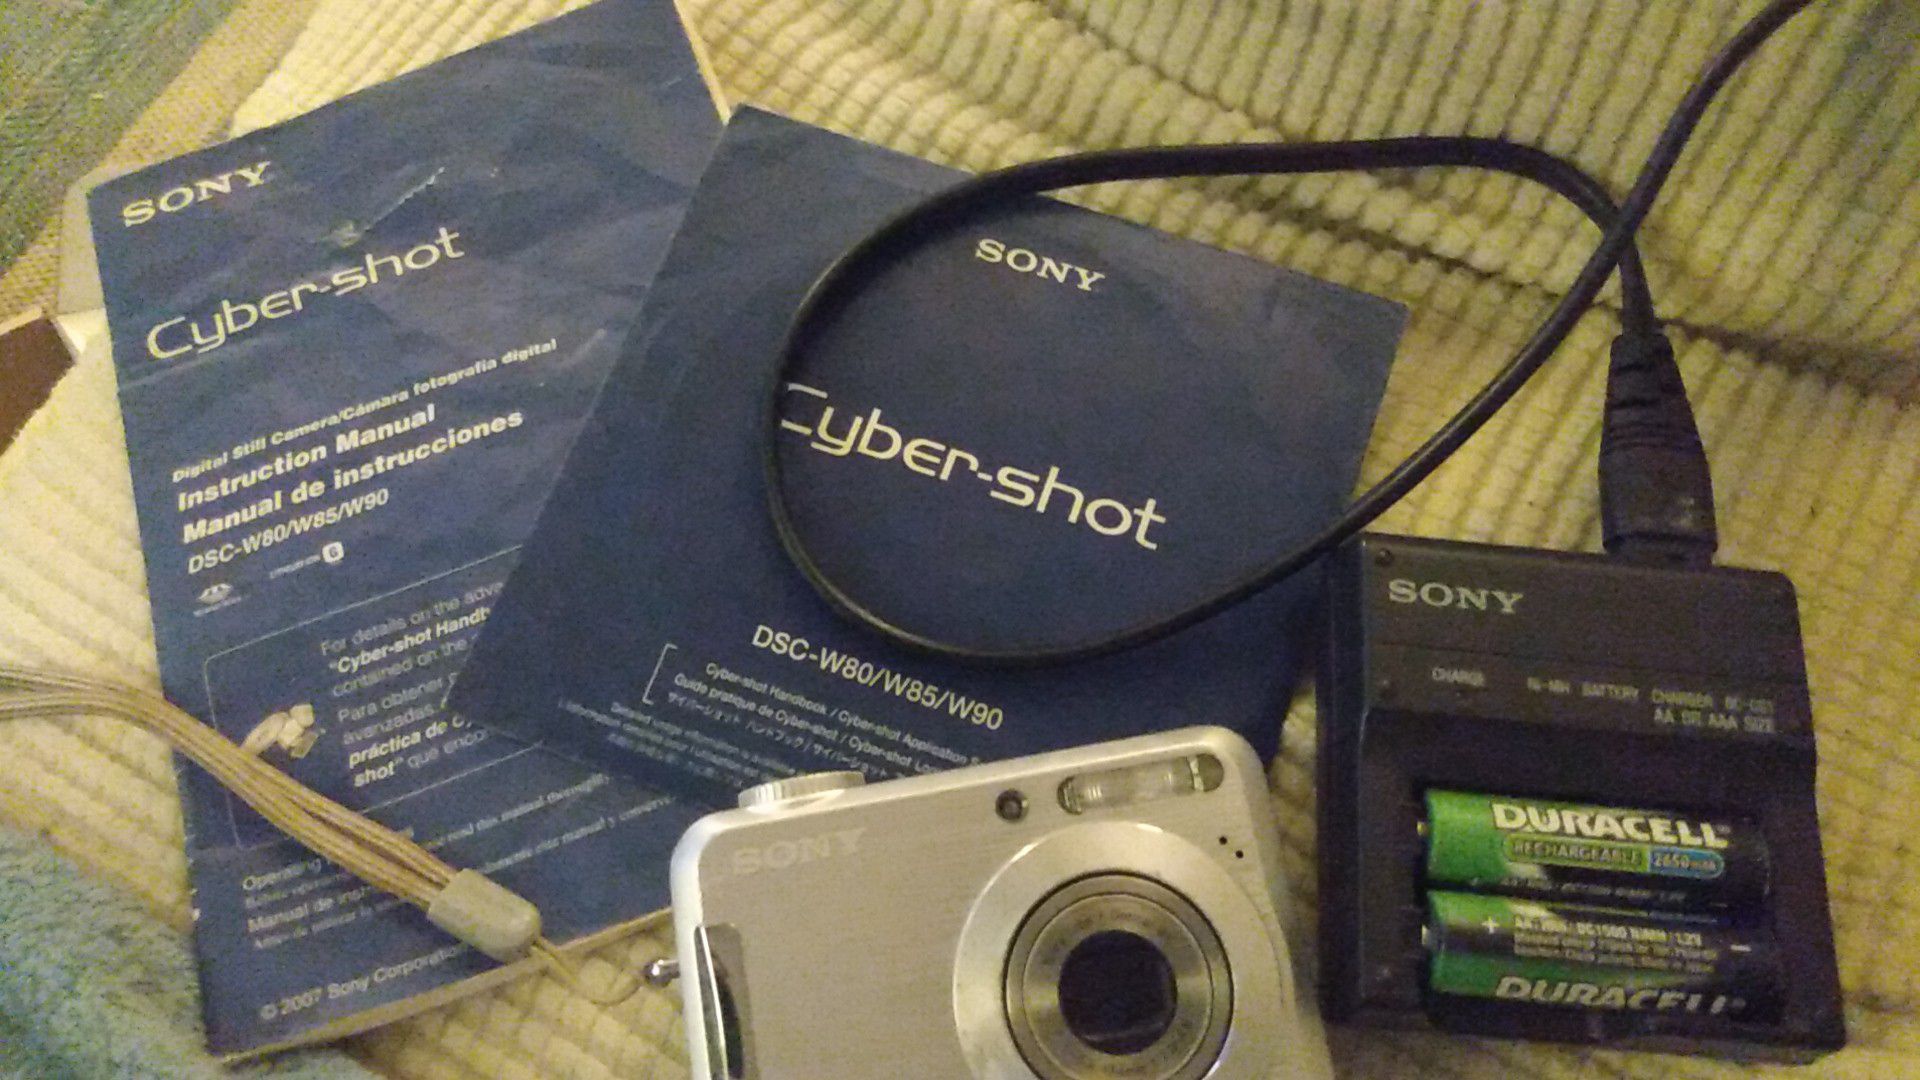 Sony Cybershot Digital Camera w rechargable batteries